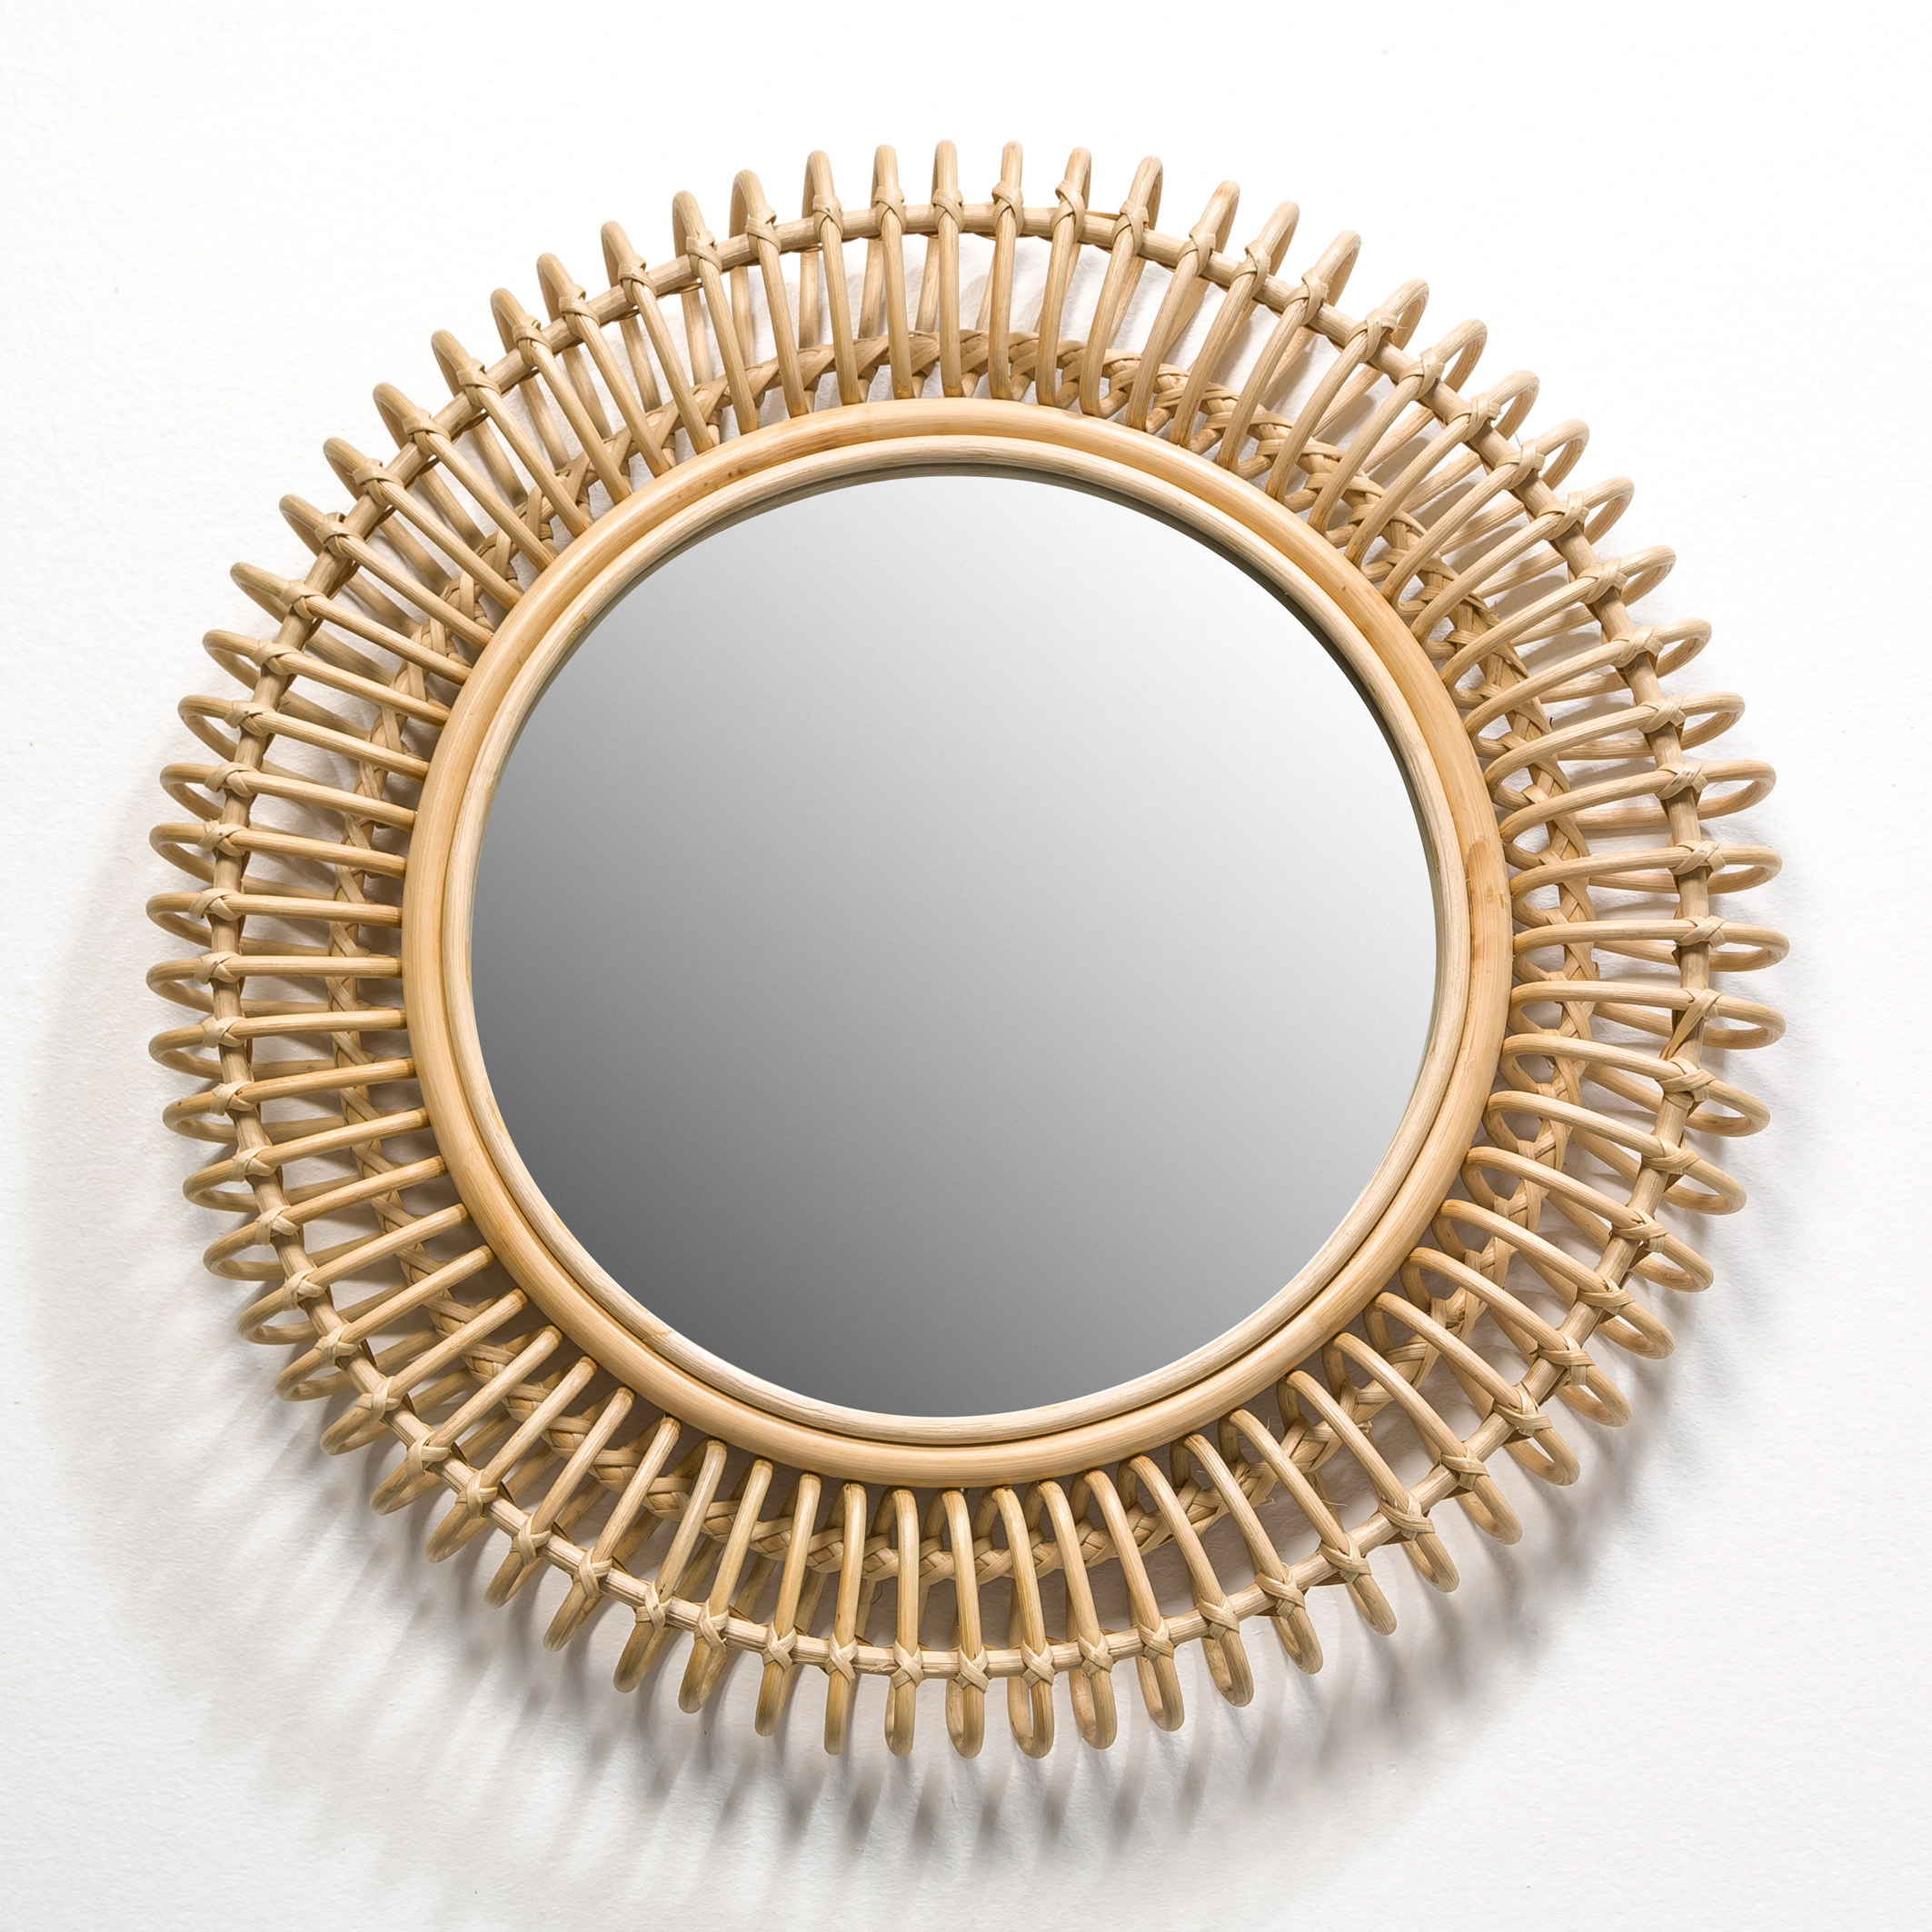 Tarsile Round Rattan Mirror Natural Am, Oak Framed Mirrors At M S